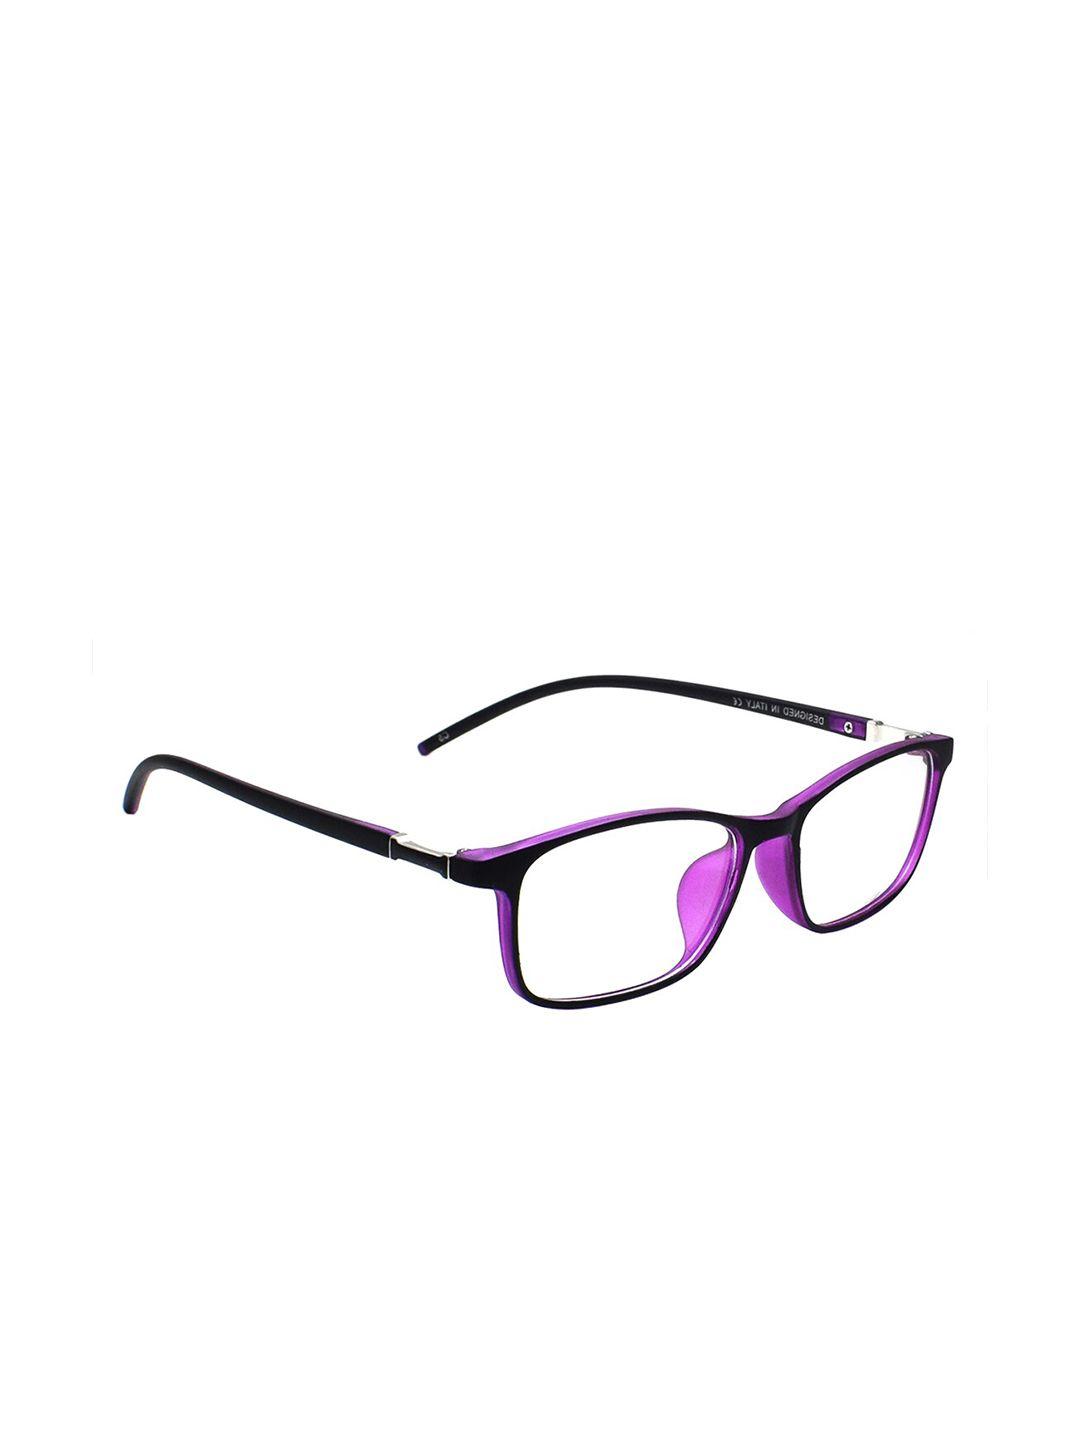 peter jones eyewear unisex purple full rim anti glare rectangle frames 1810pl-purple